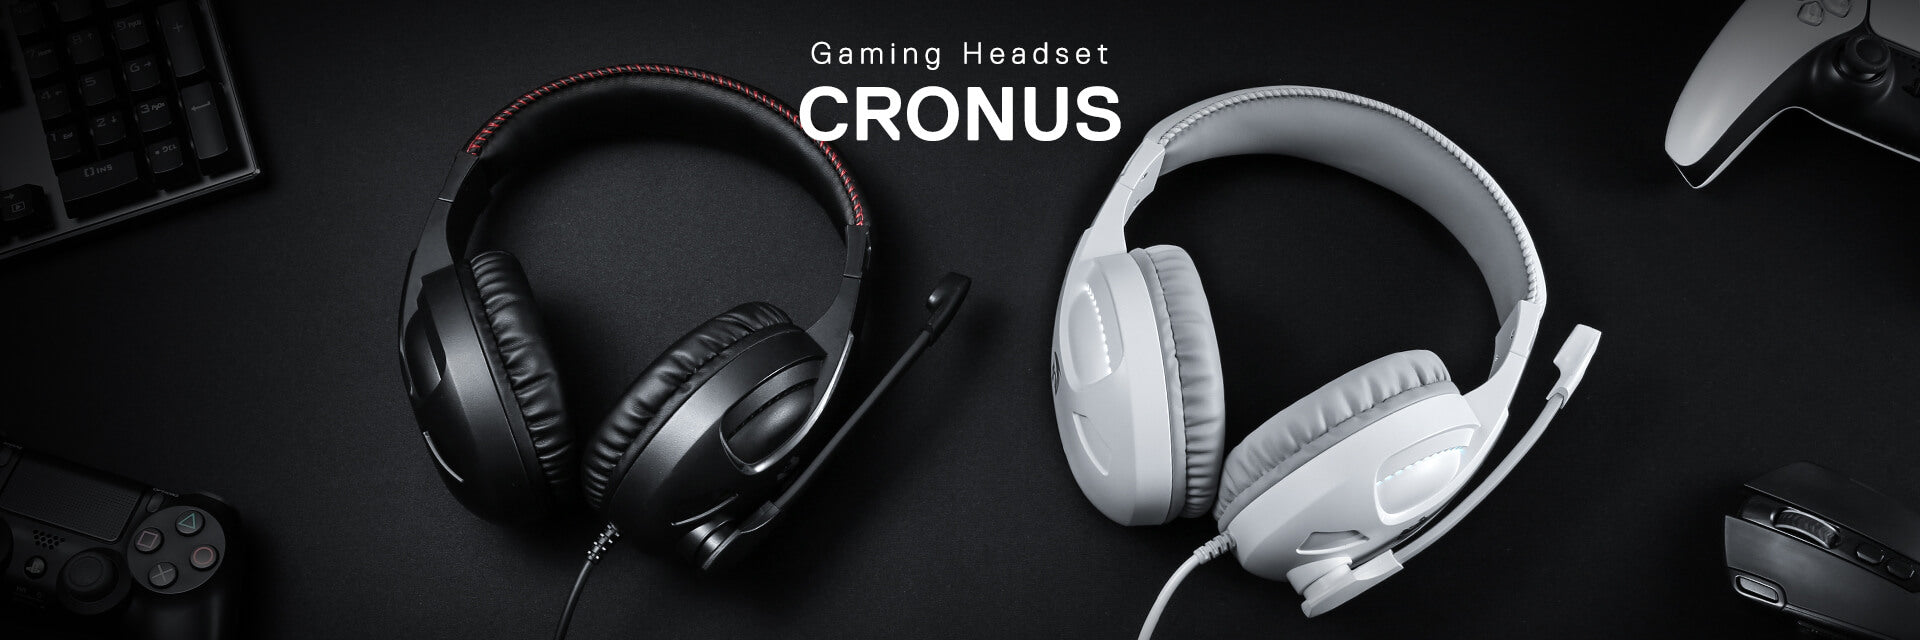 Redragon_H211_Cronus_Wired_Gaming_Headset_11